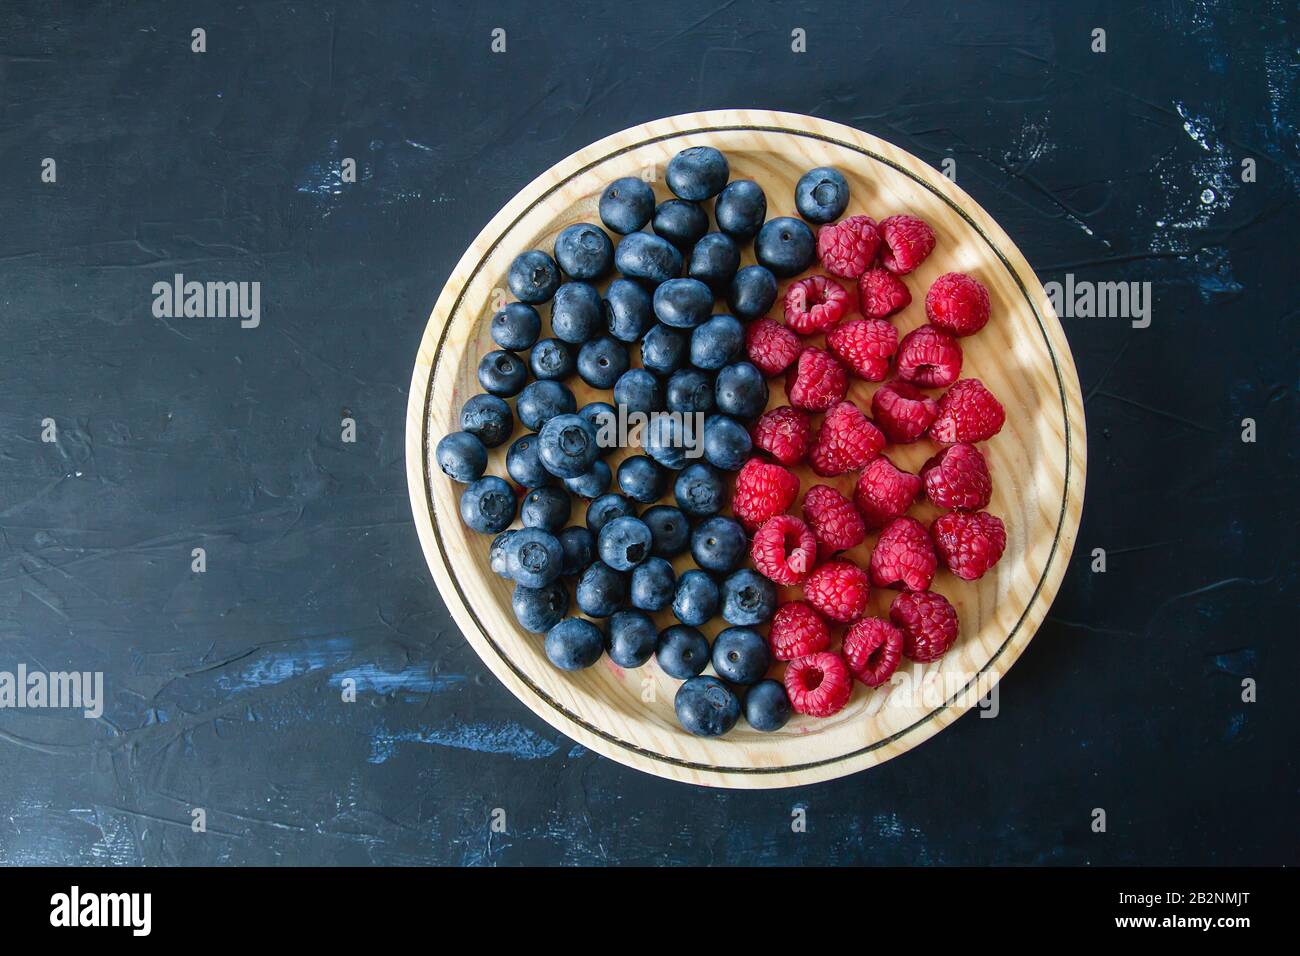 Fresh blueberries and raspberries on wooden dish Stock Photo